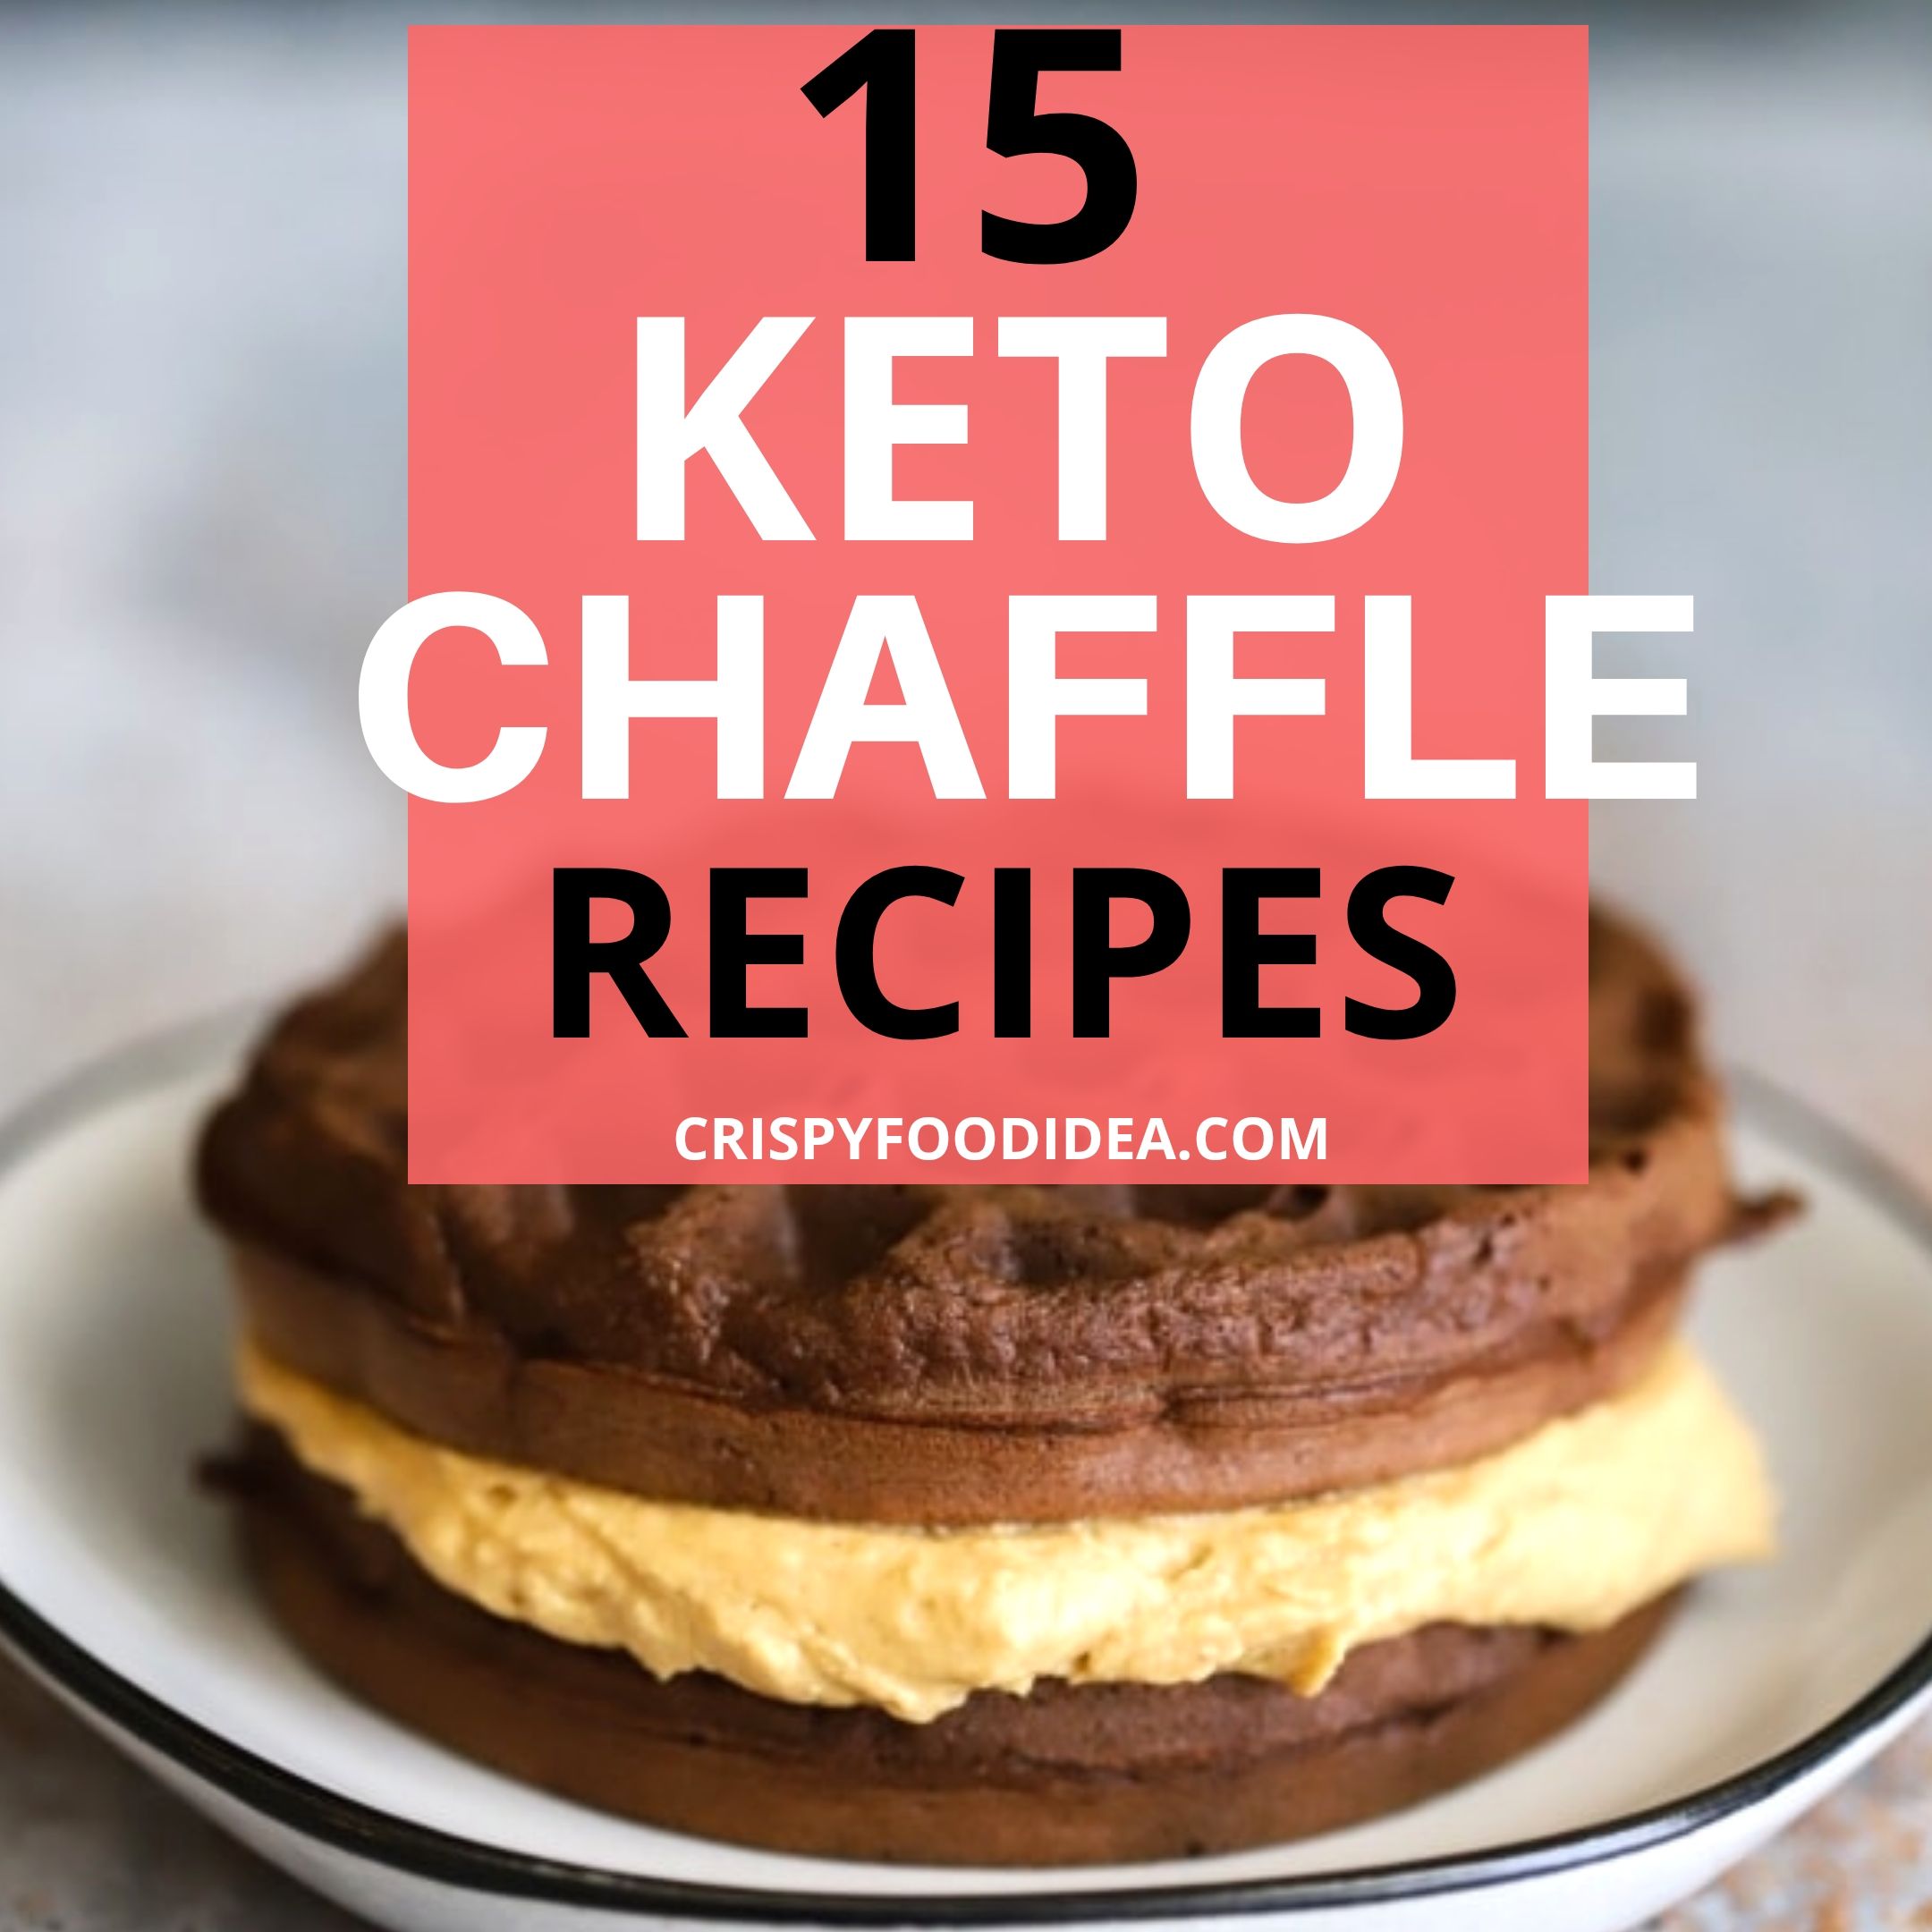 Keto Chaffles recipes